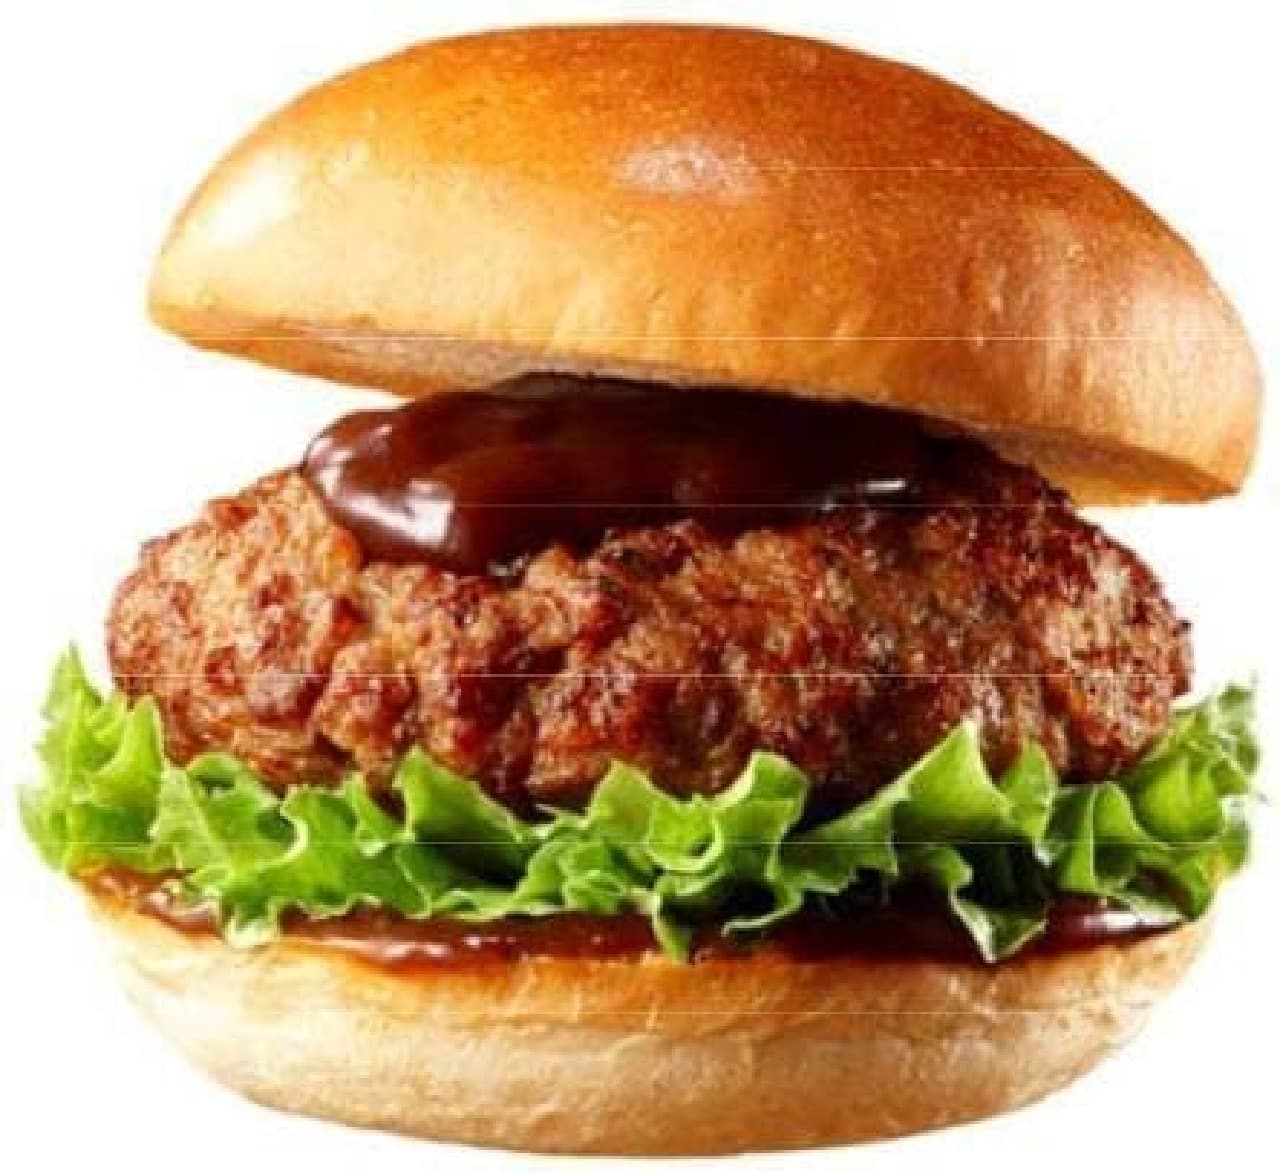 Luxury burger using brand beef "Matsusaka beef"